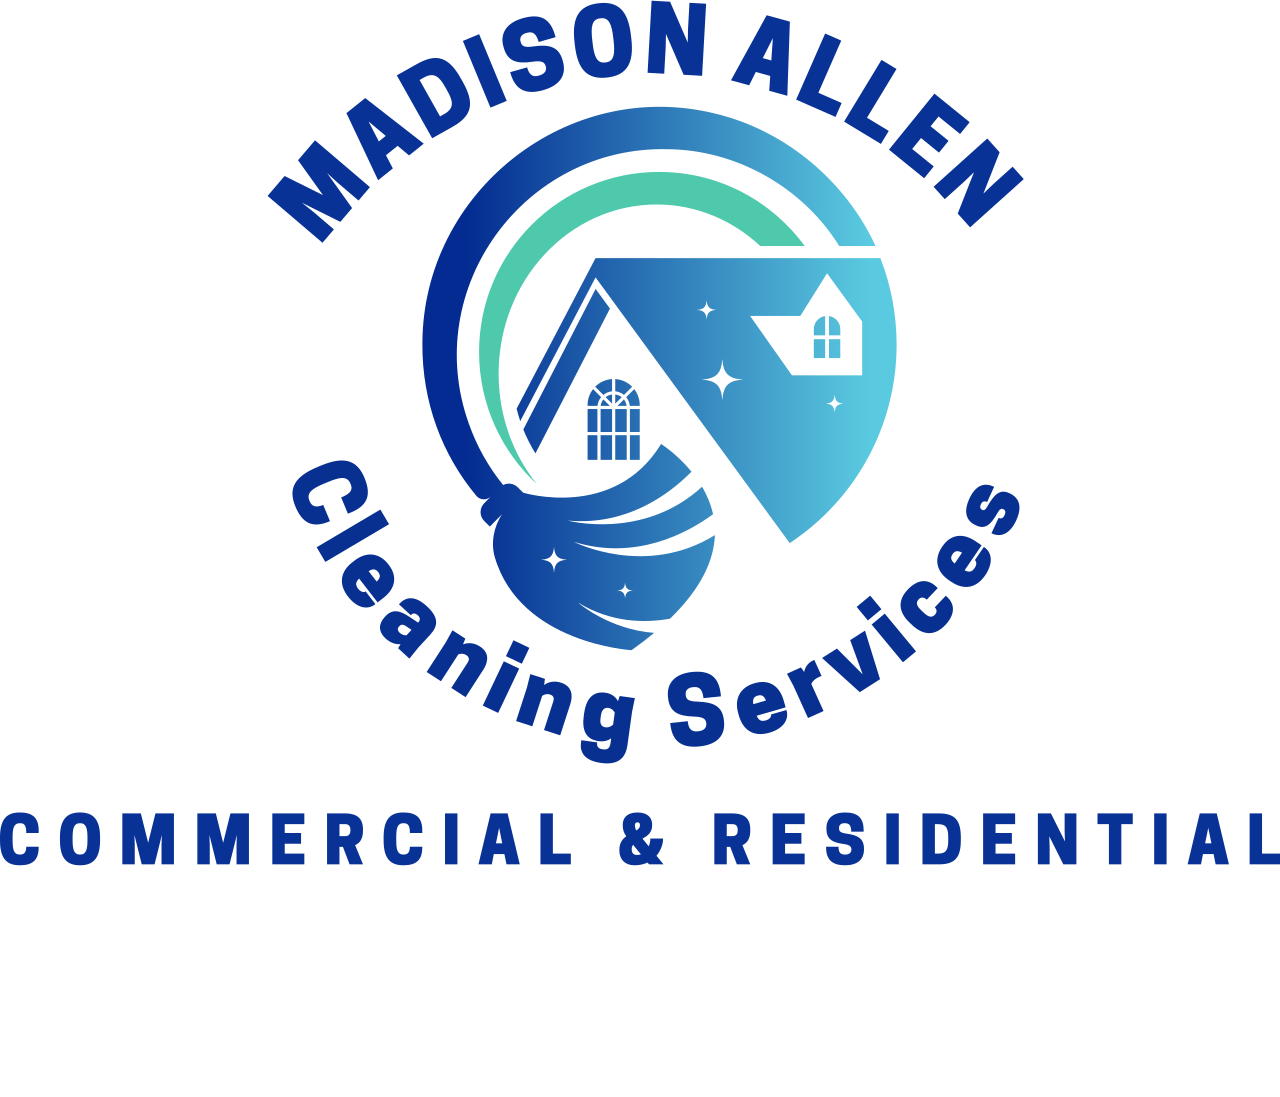 MADISON ALLEN 's logo